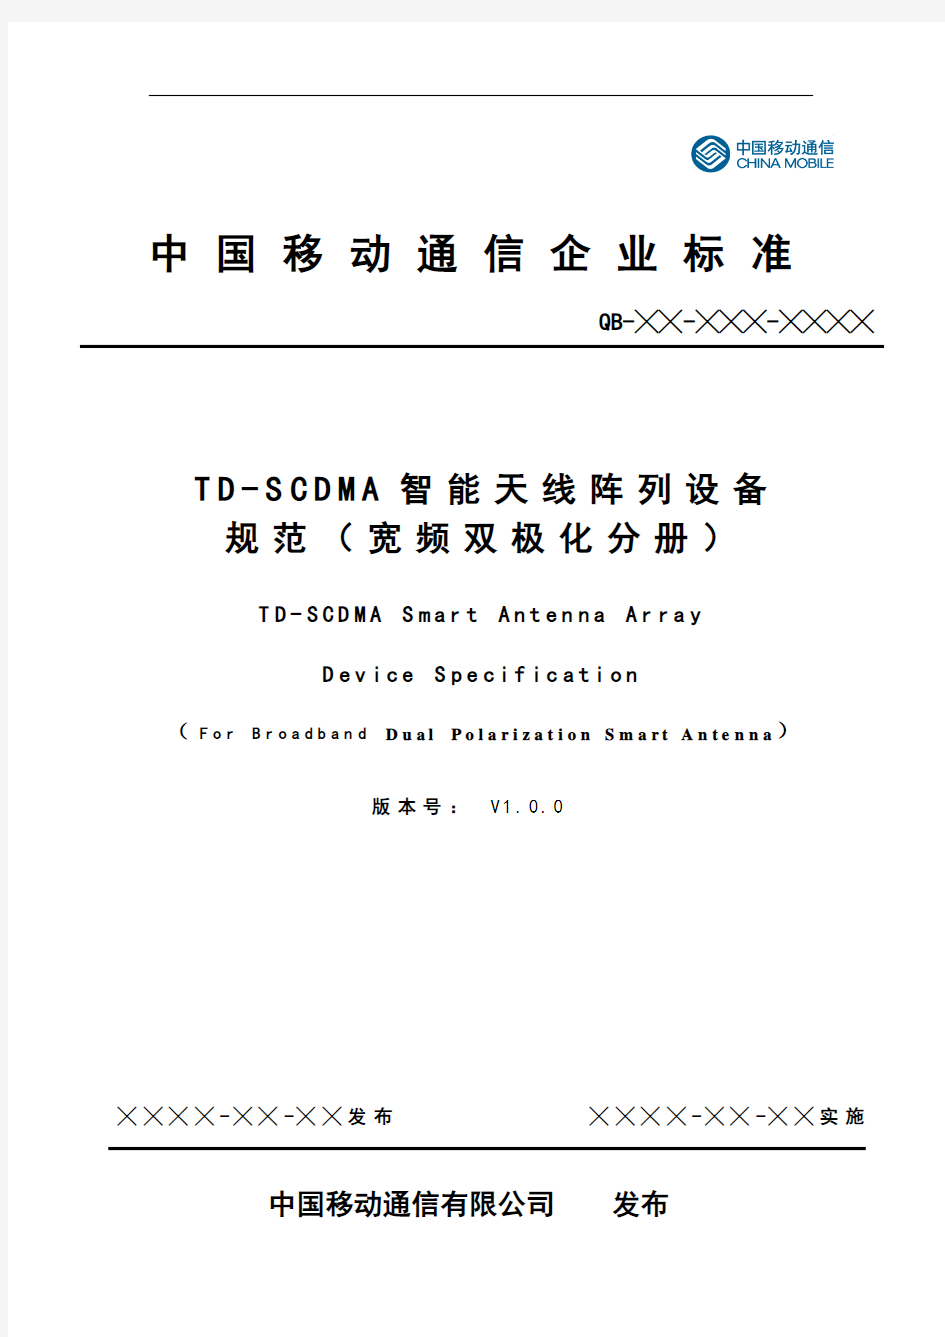 TD-SCDMA宽频双极化智能天线设备规范v1.1.0